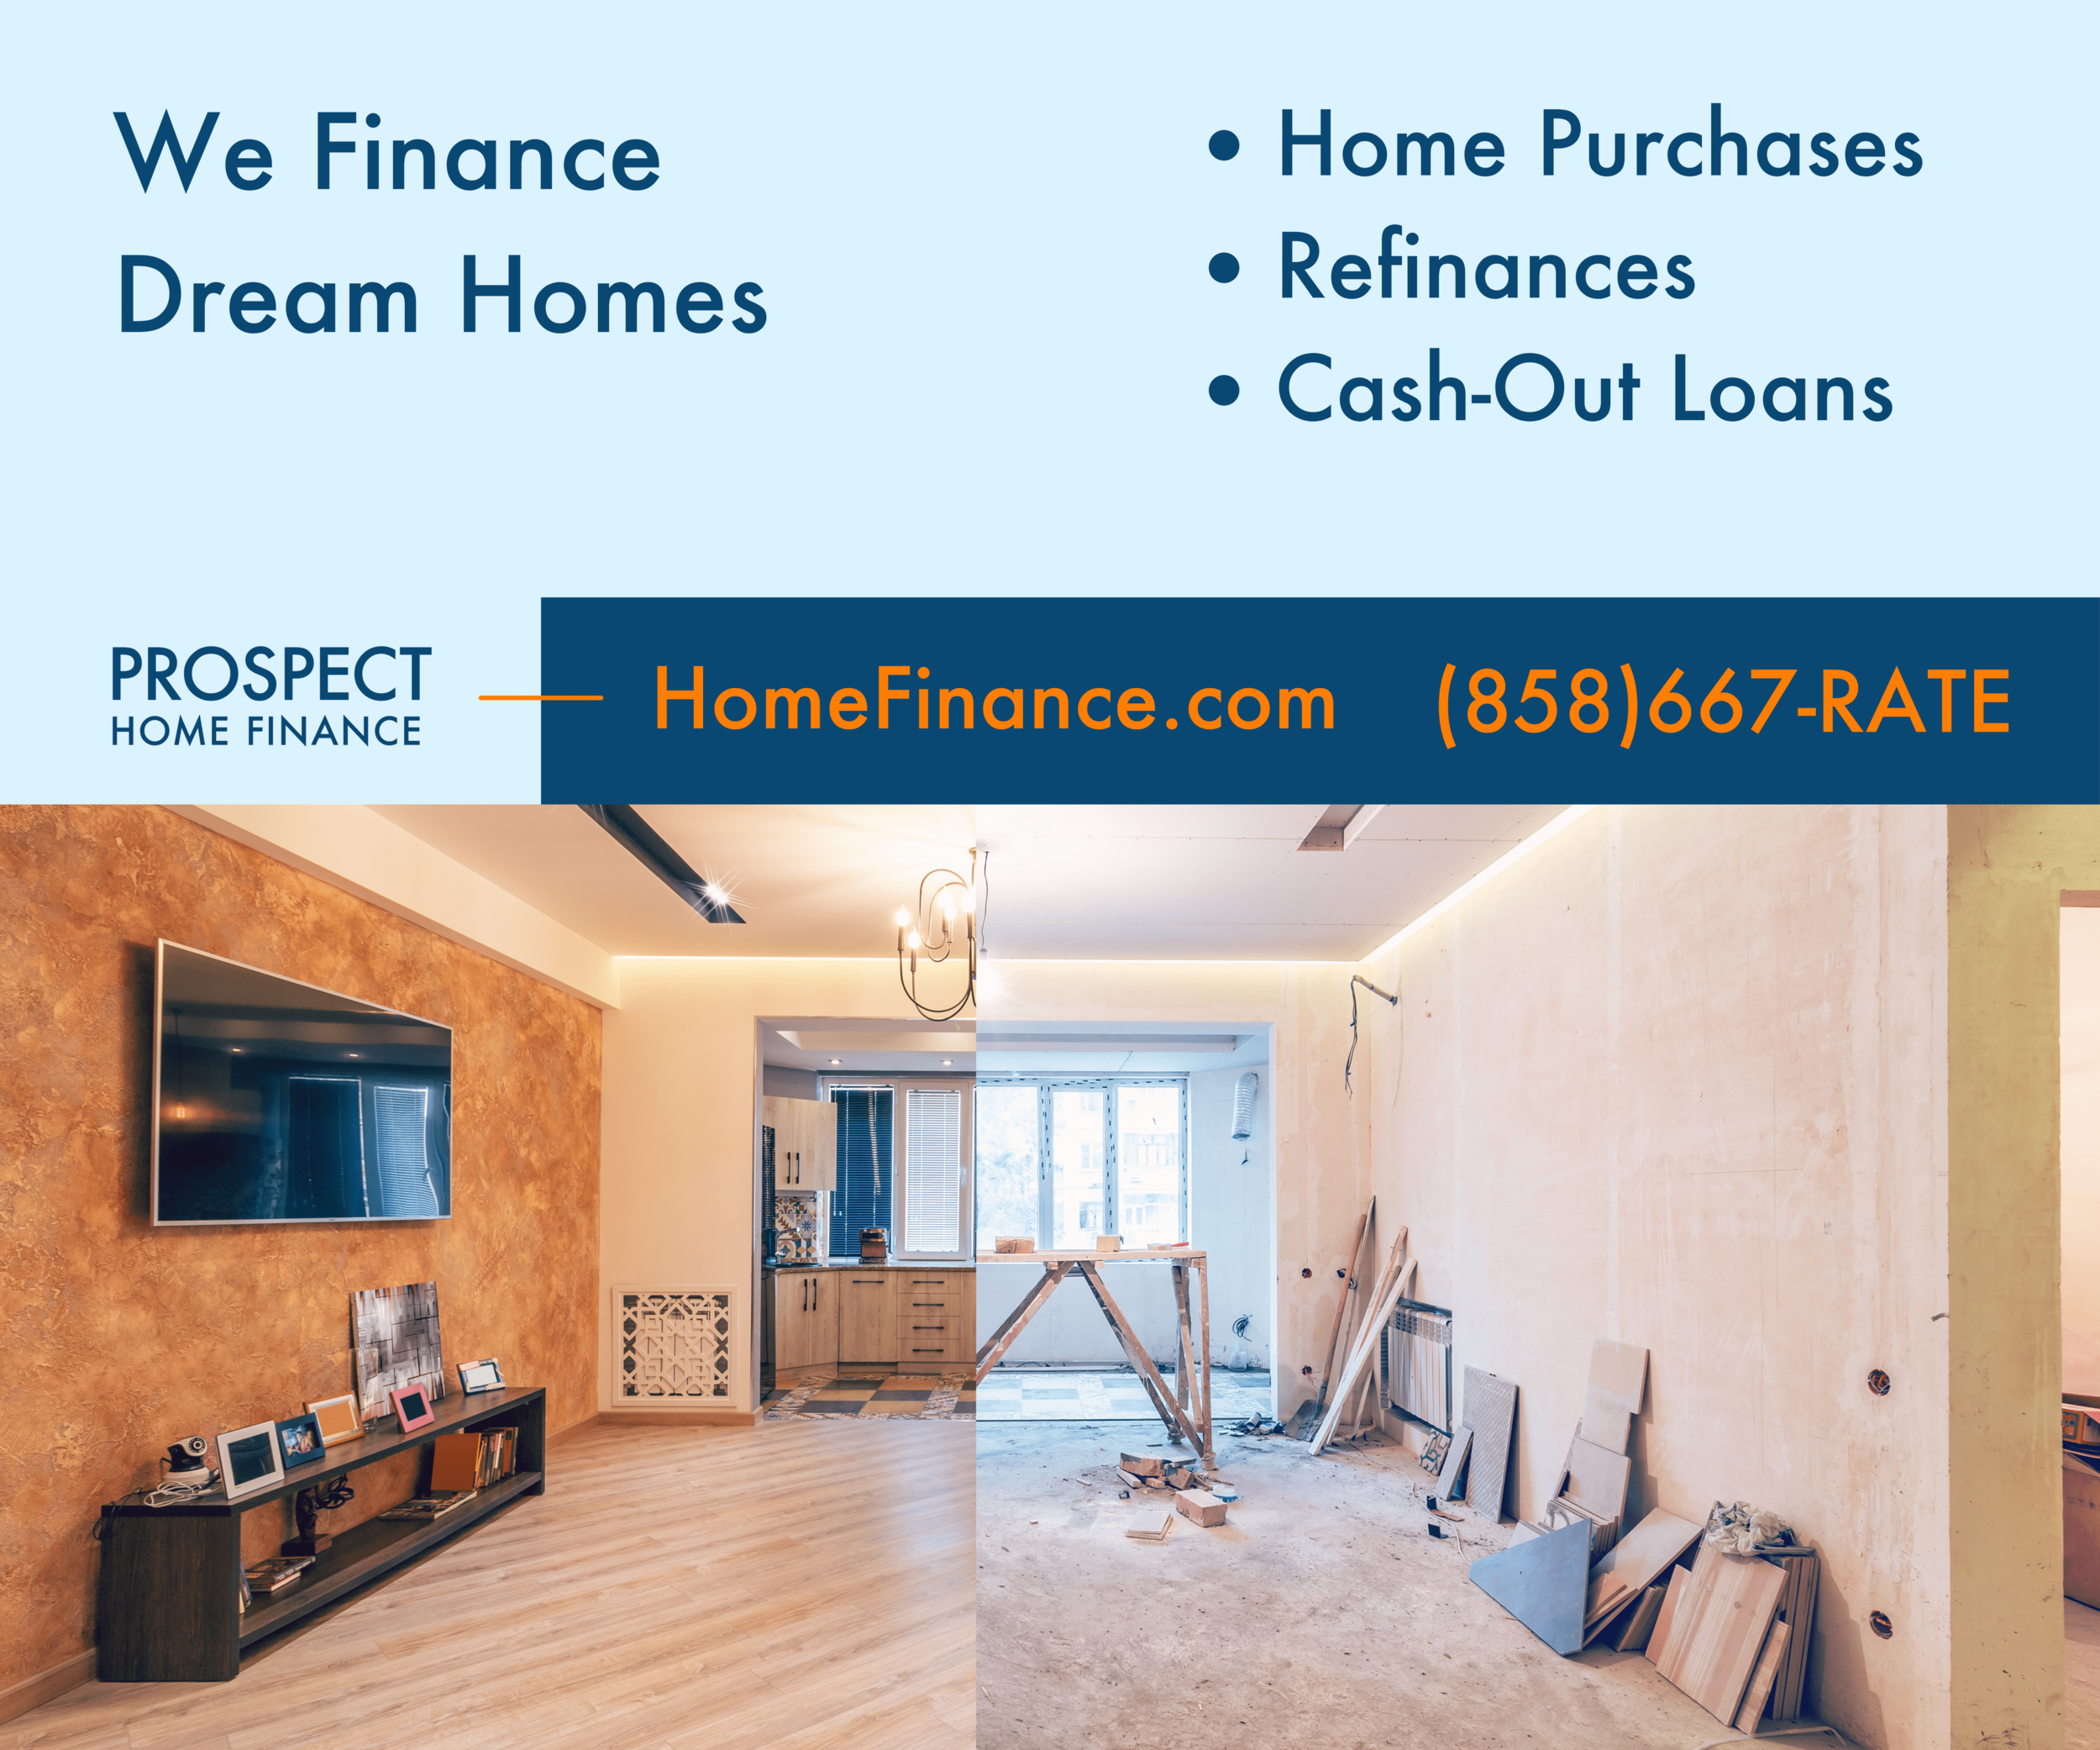 Prospect Home Finance